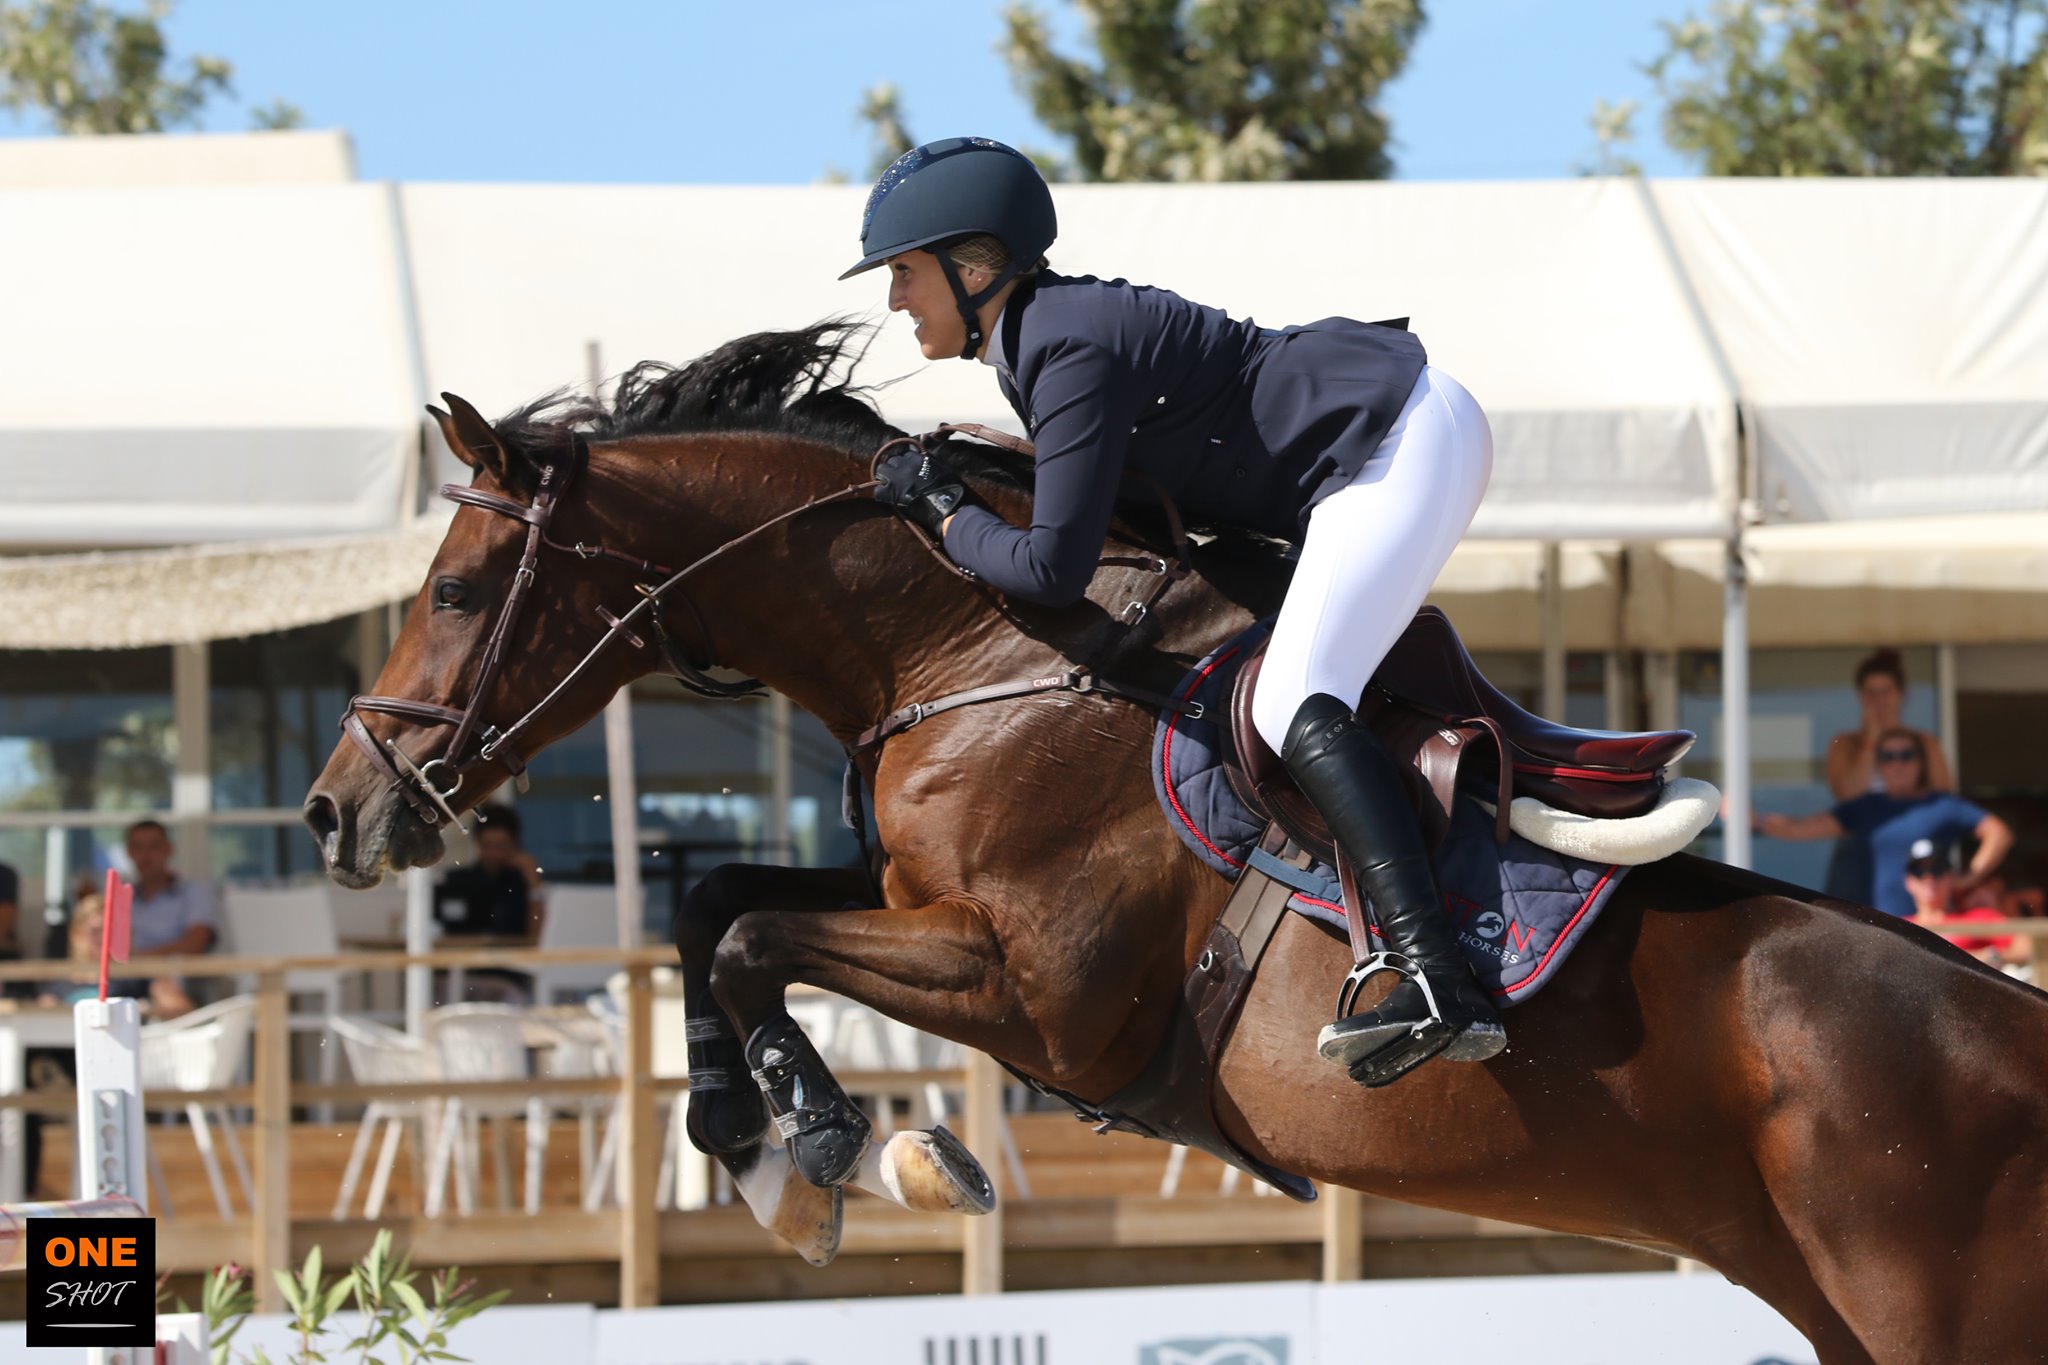 Chloe Aston shines at the Vilamoura Equestrian Center